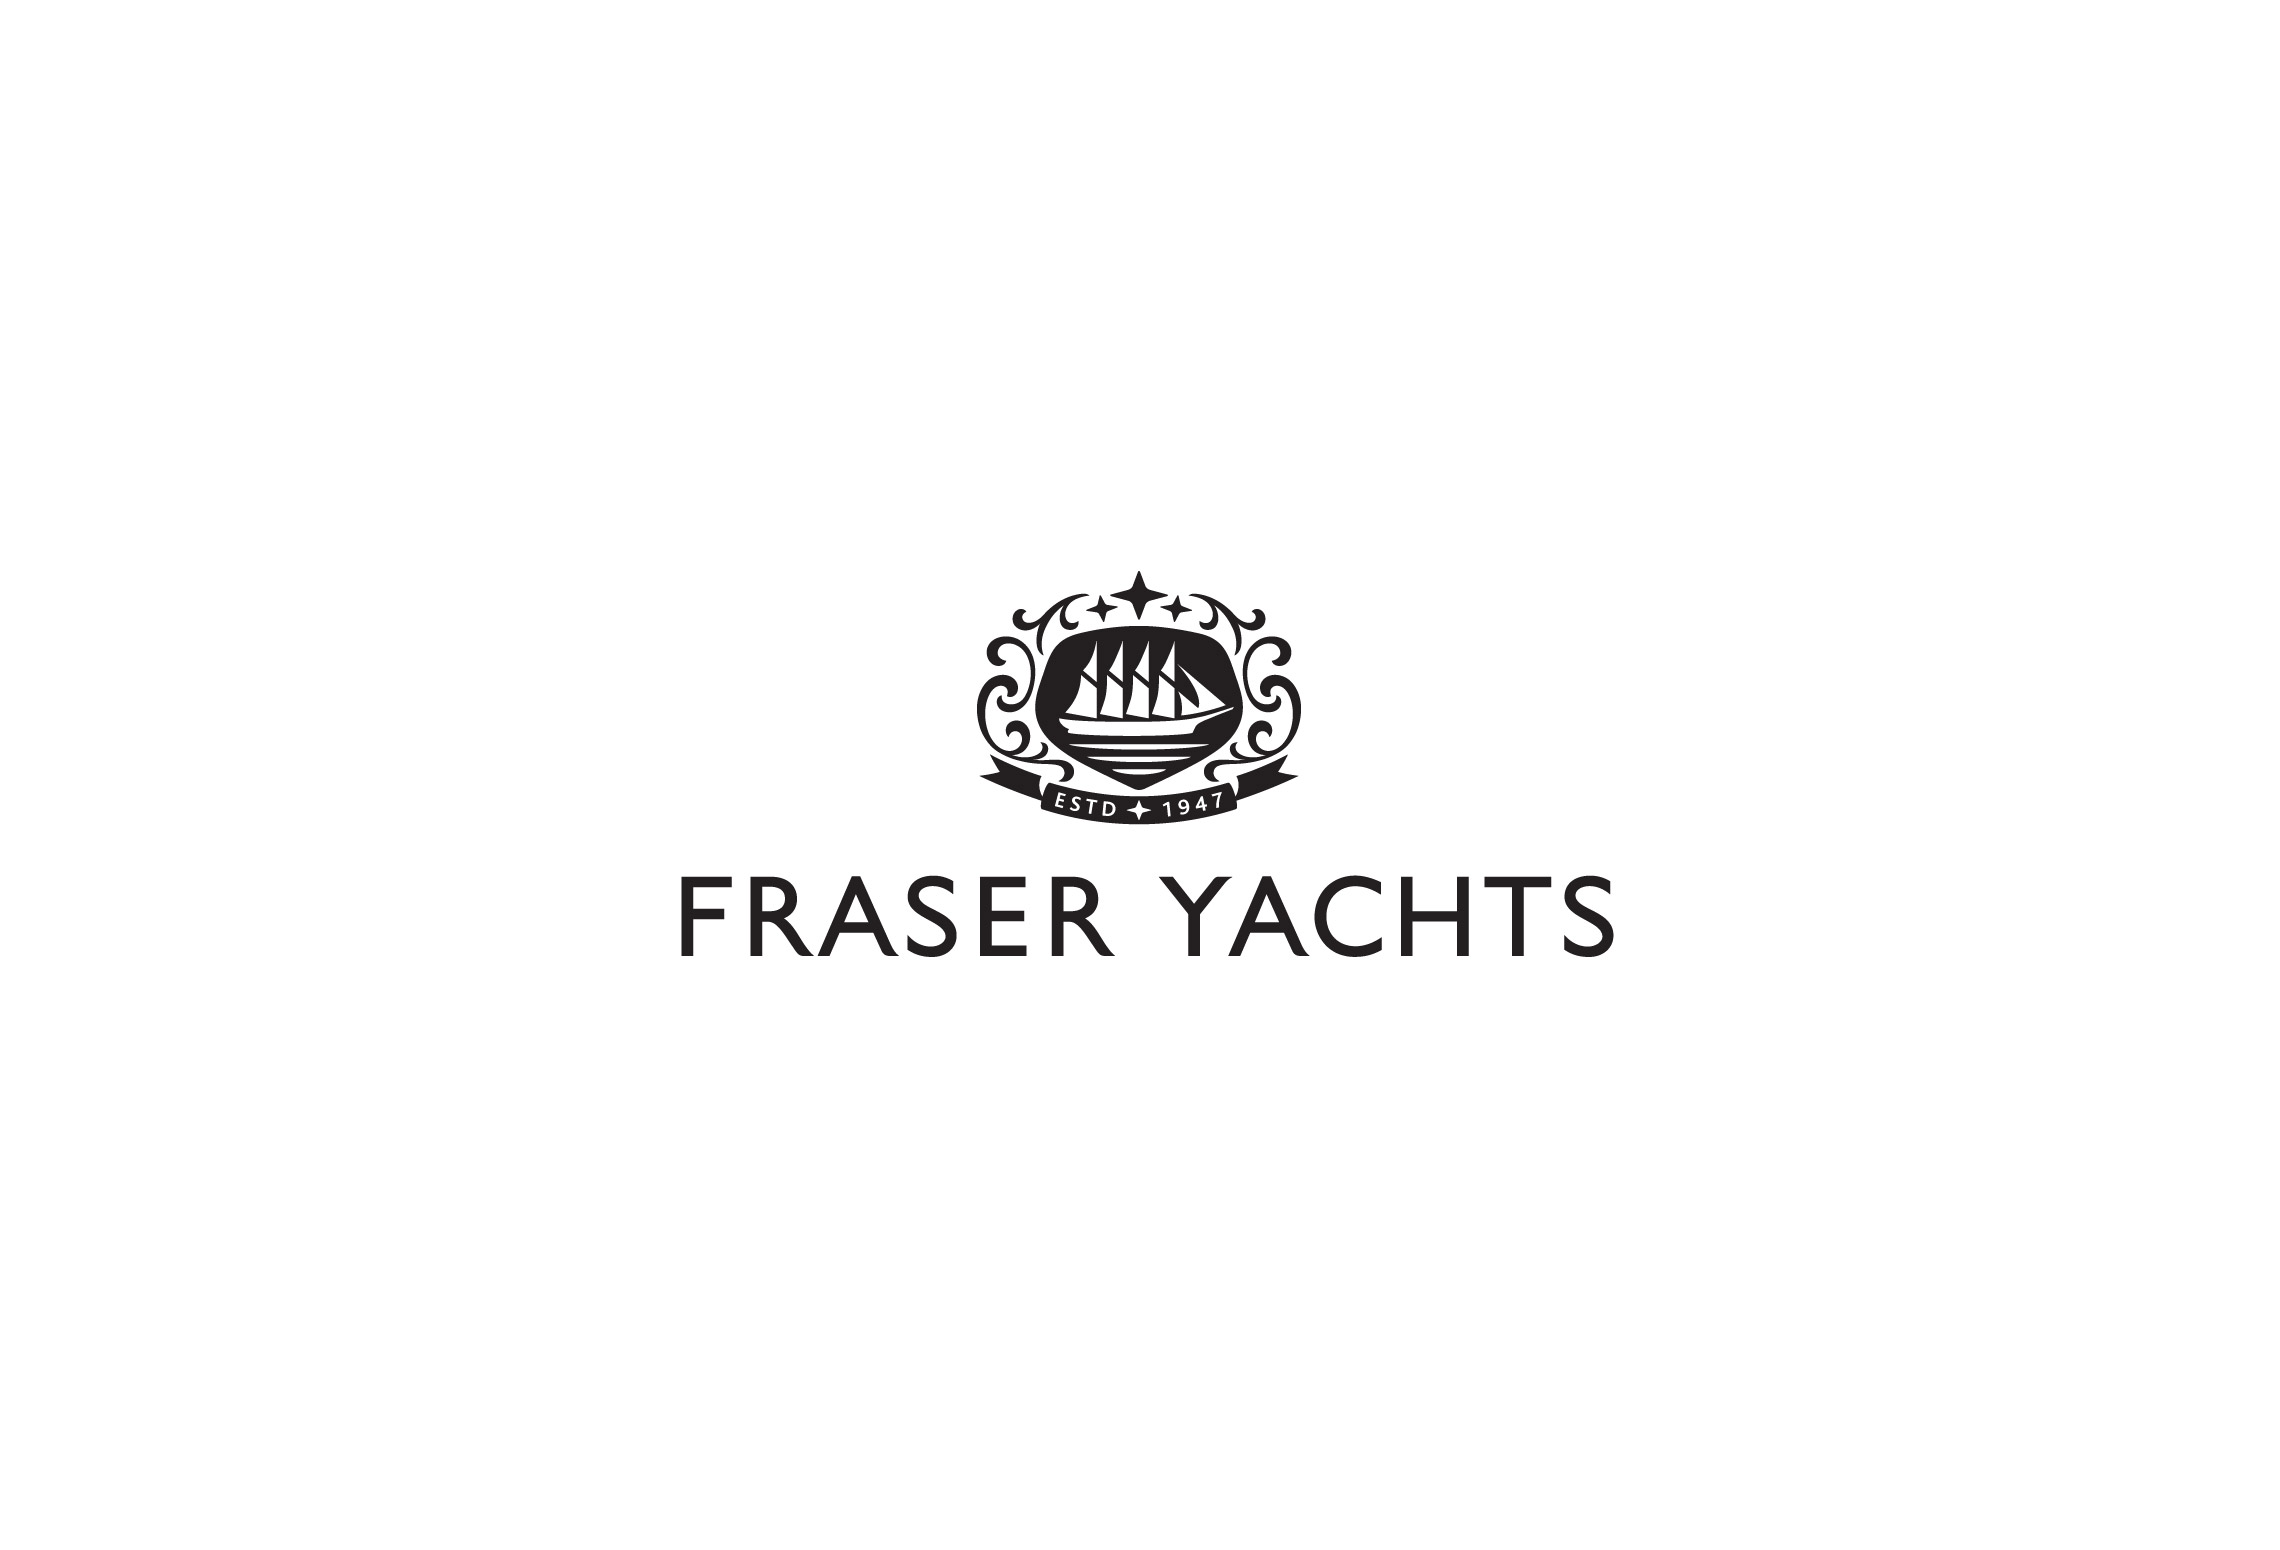 fraser yachts limited